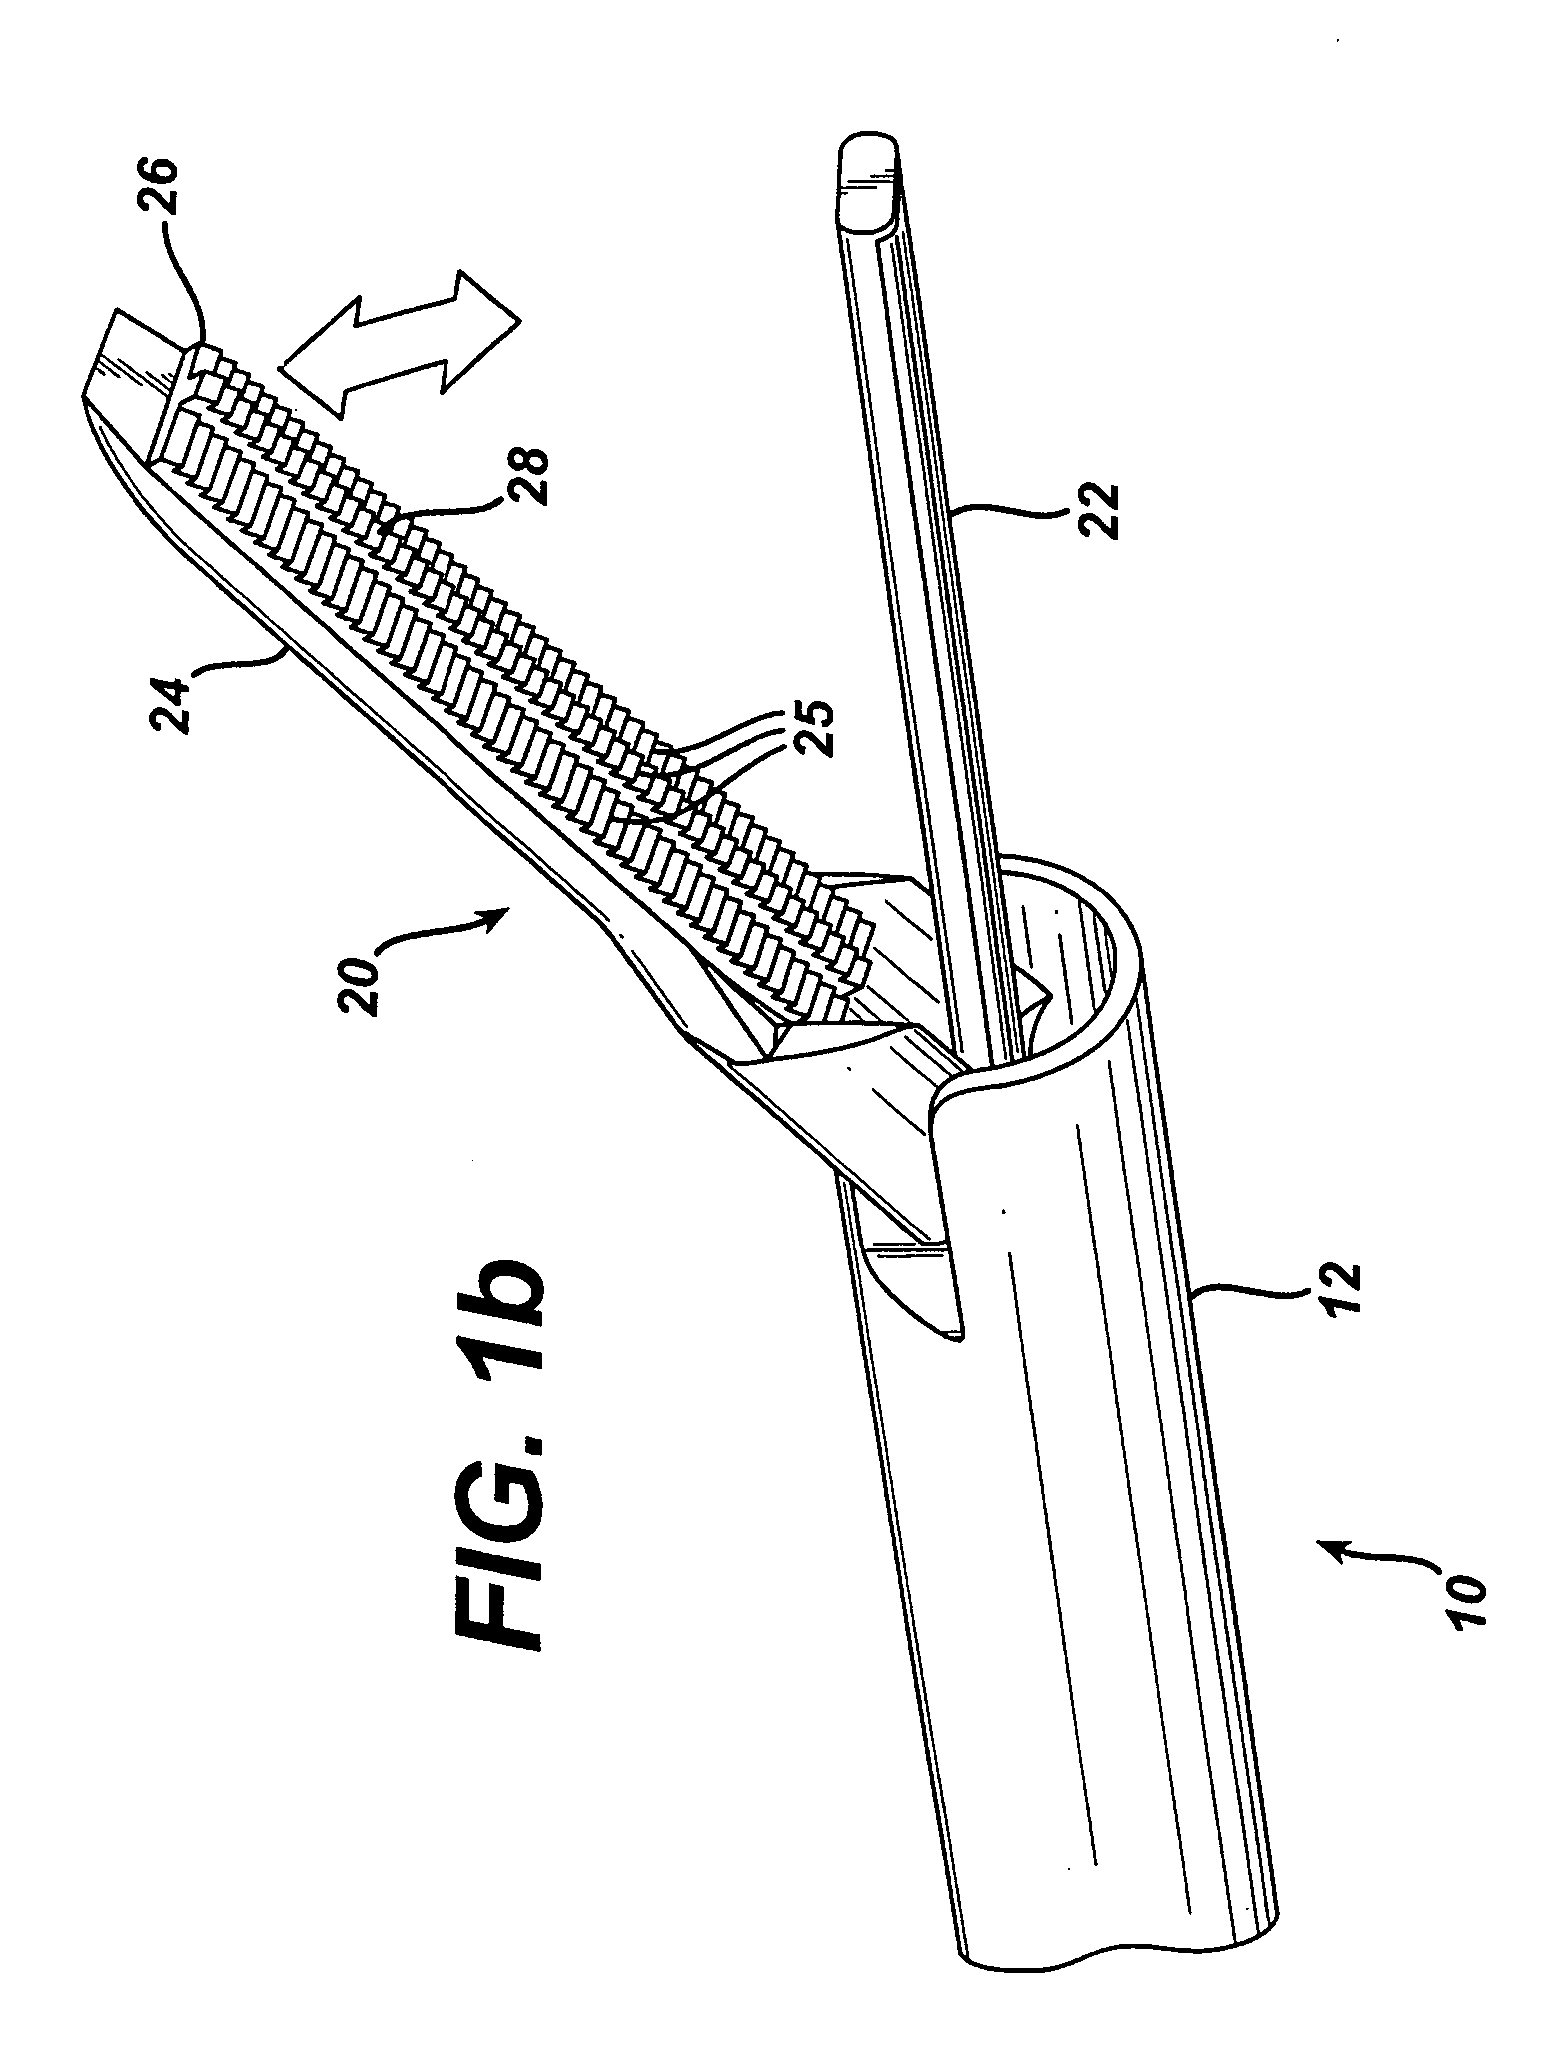 Ultrasonic clamp coagulator apparatus having an improved clamping end-effector